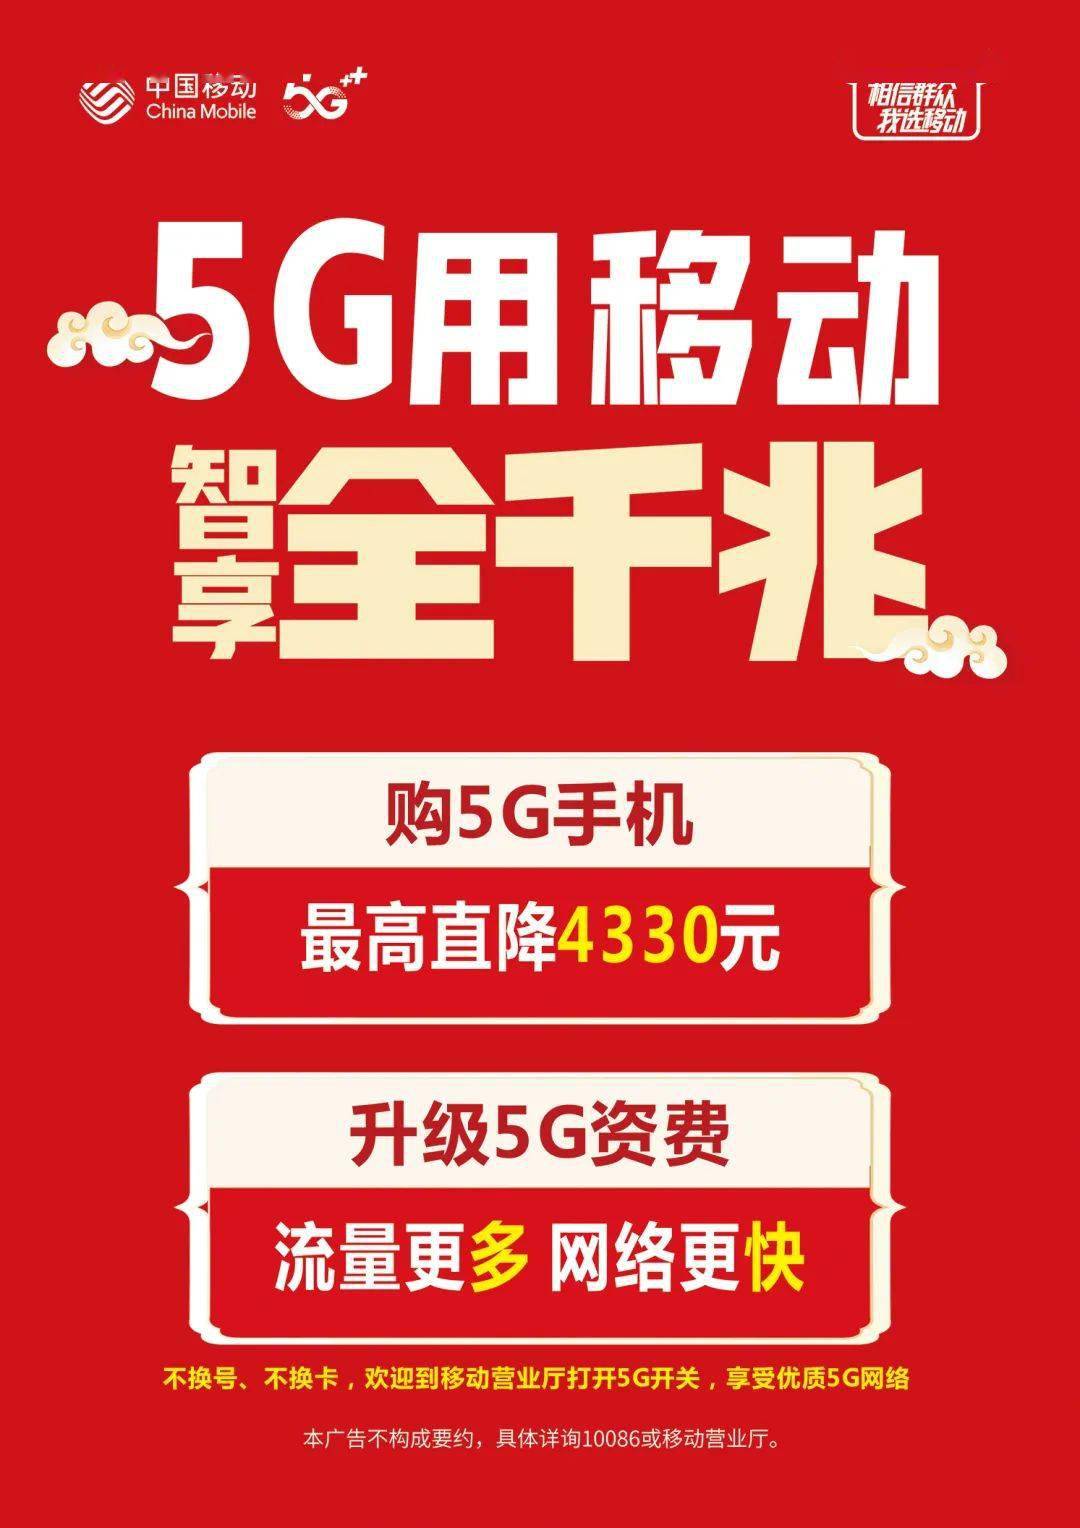 5G网络资费仅需98元，预见生活方式变革浪潮席卷  第2张